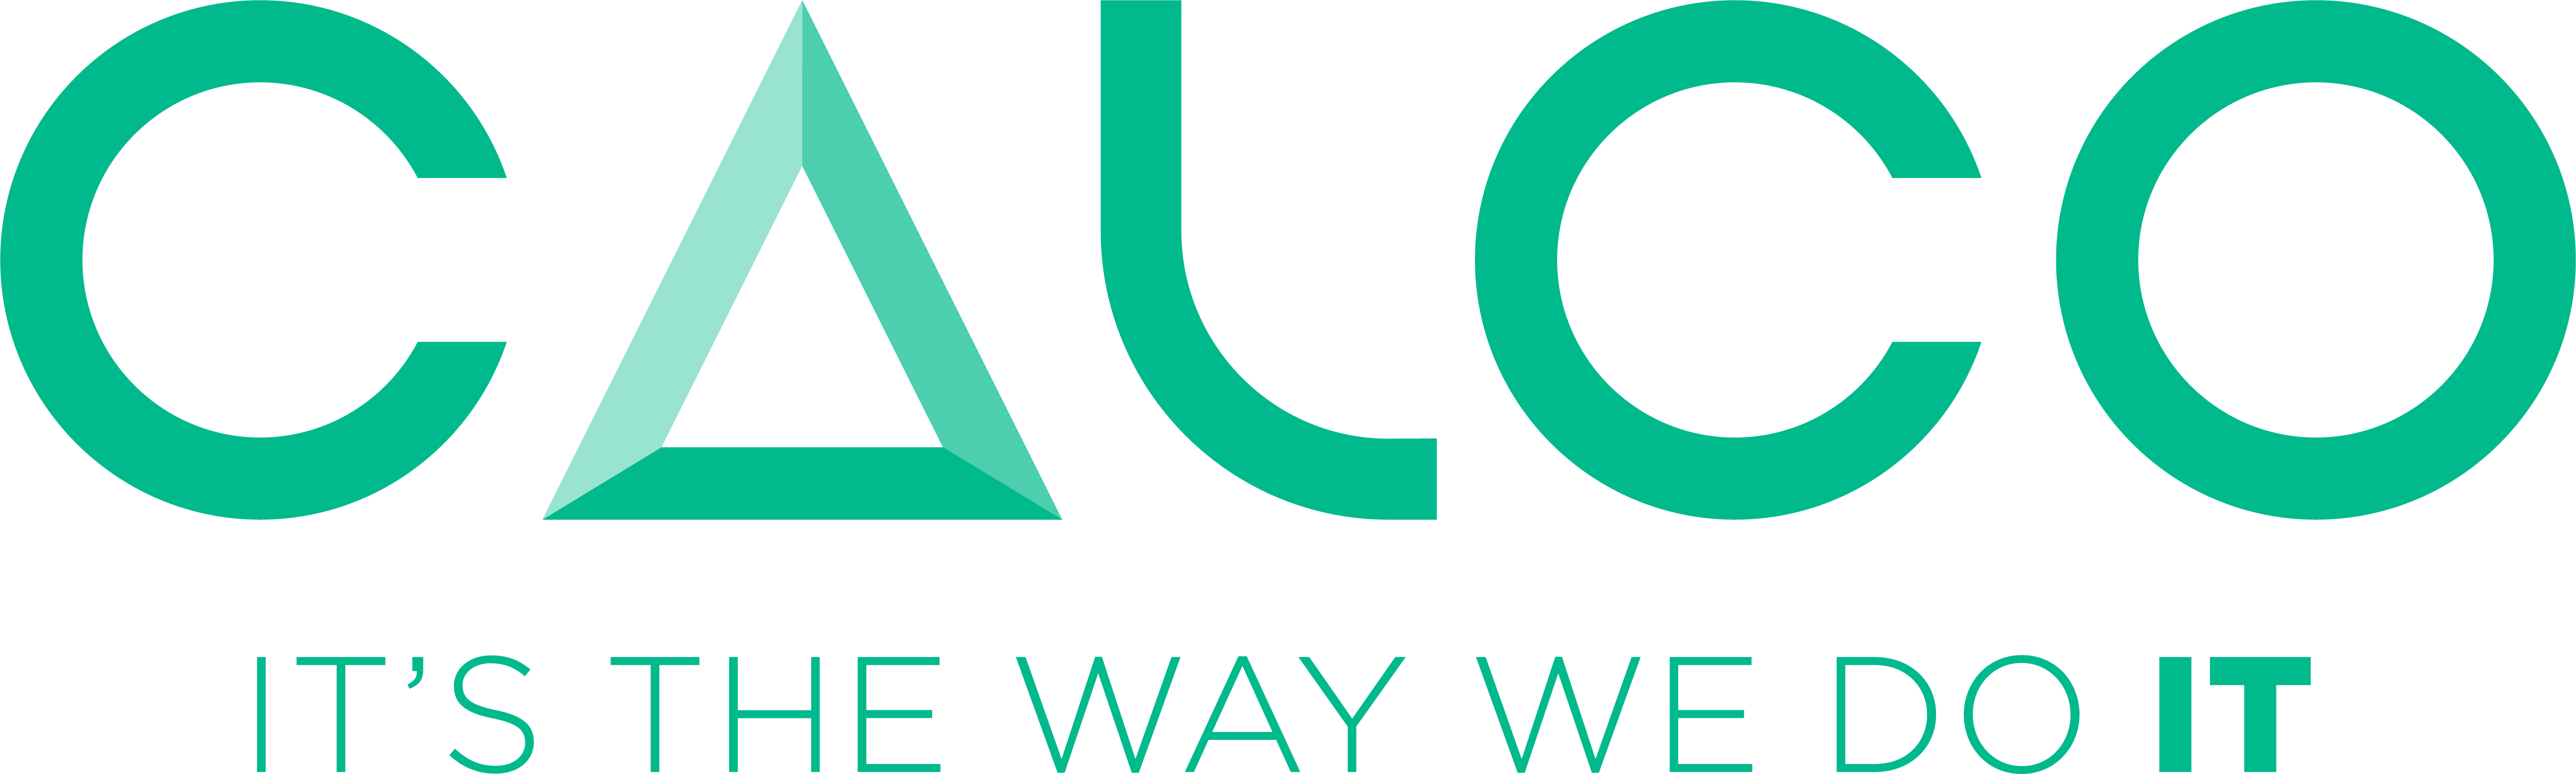 Calco/ Overheid logo